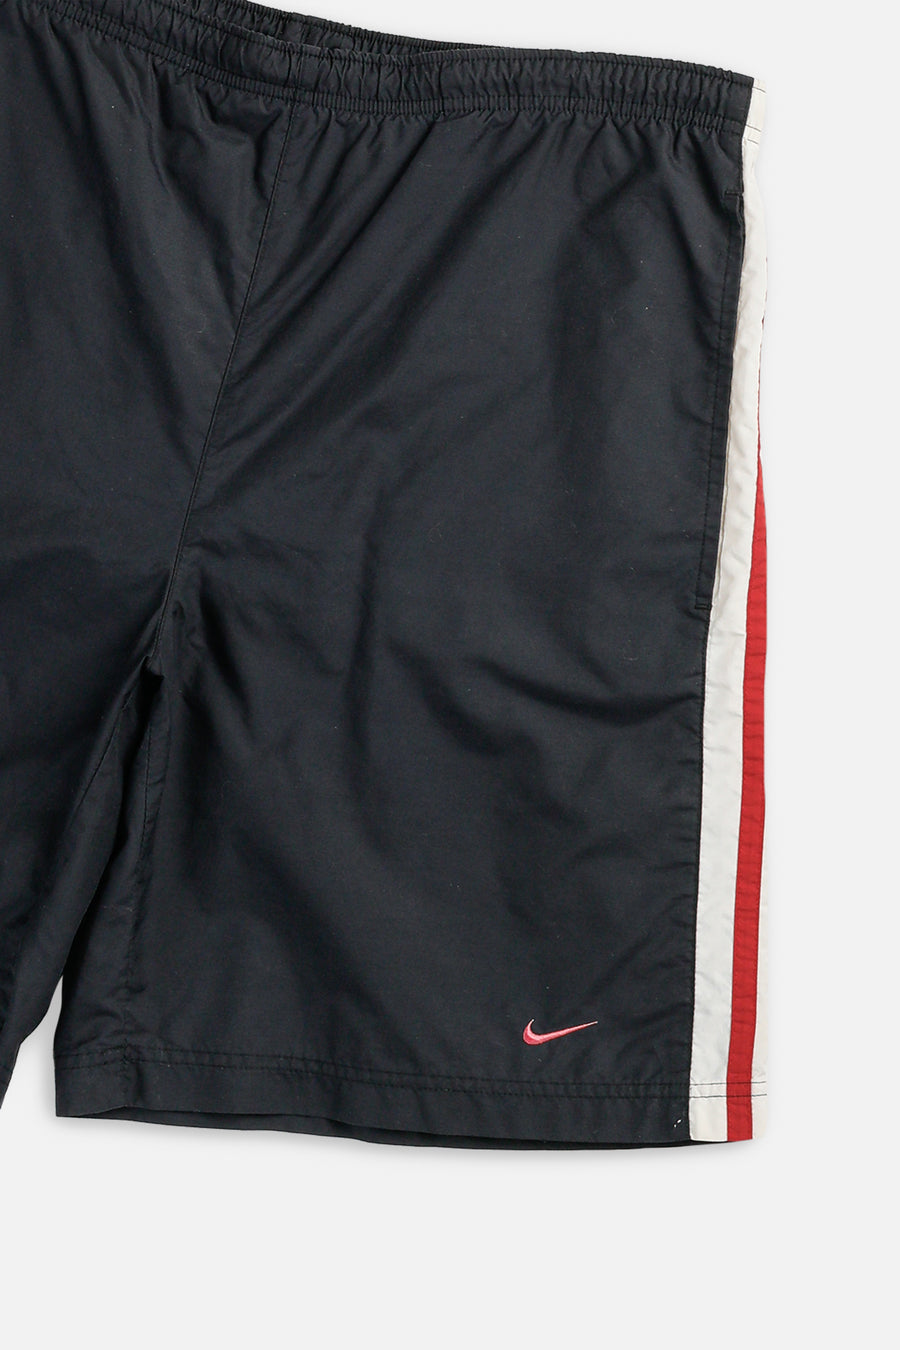 Vintage Nike Windbreaker Shorts - L